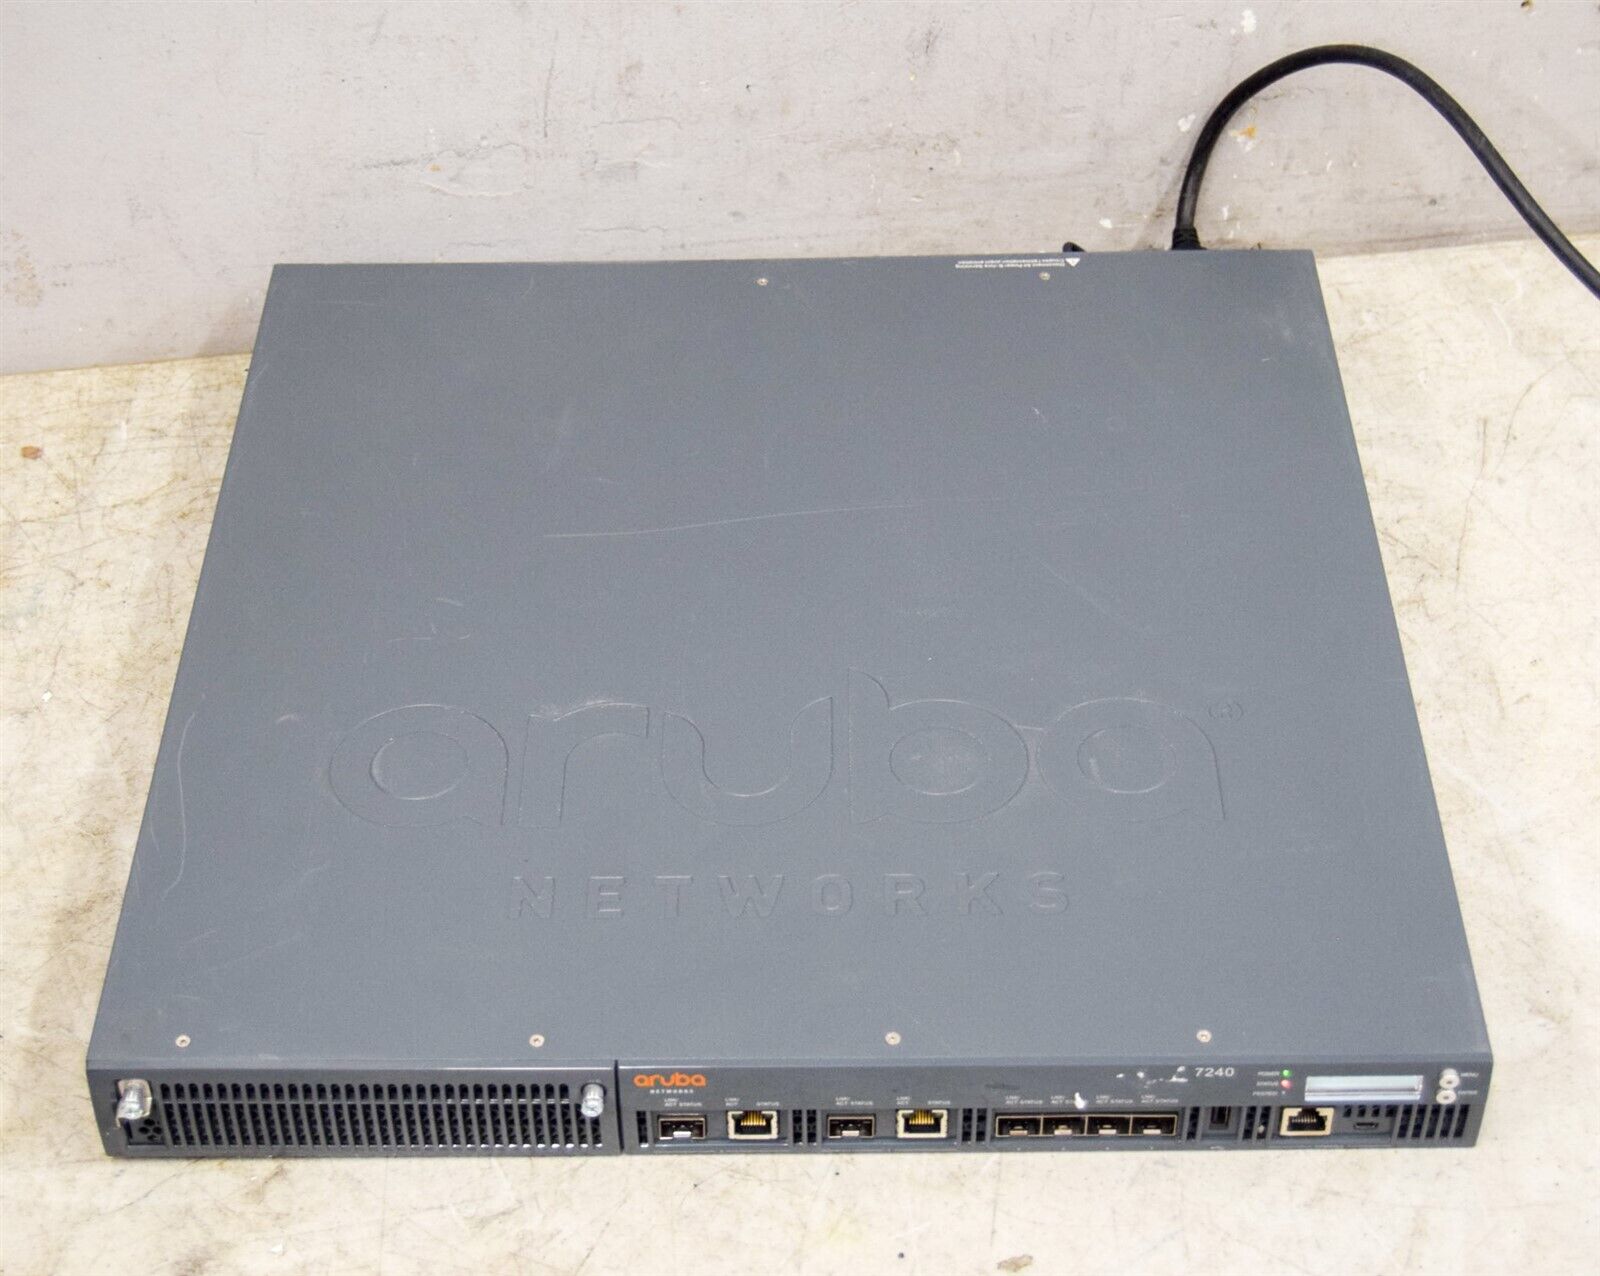 Aruba ARCN0102 7240 4P 10G SFP+ 2p 1G T HP Wireless Controller (S16)